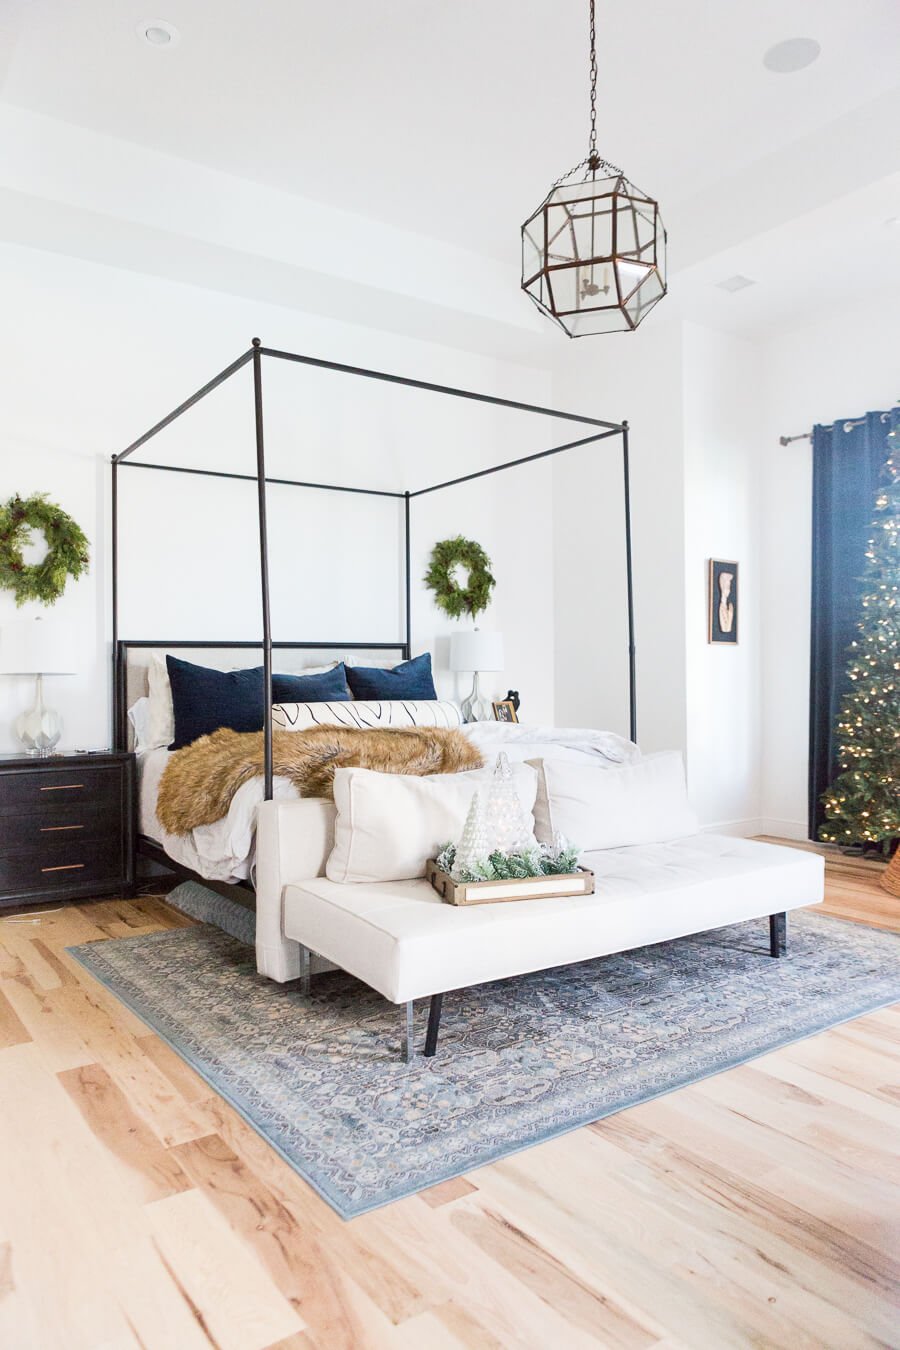 Christmas-themed bedroom decor